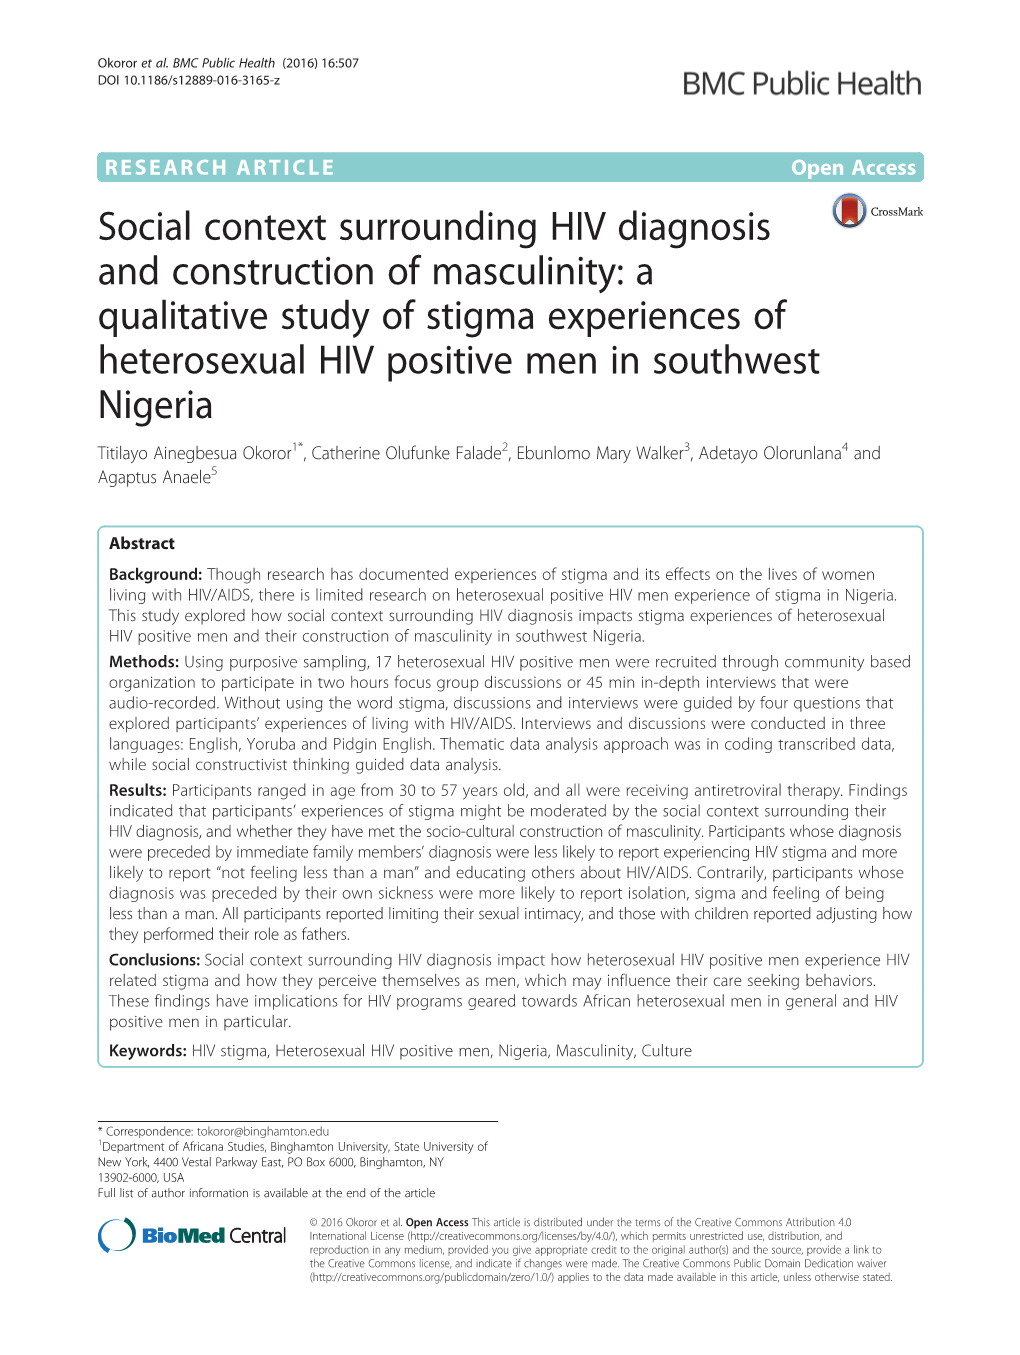 Social Context Surrounding HIV Diagnosis and Construction Of